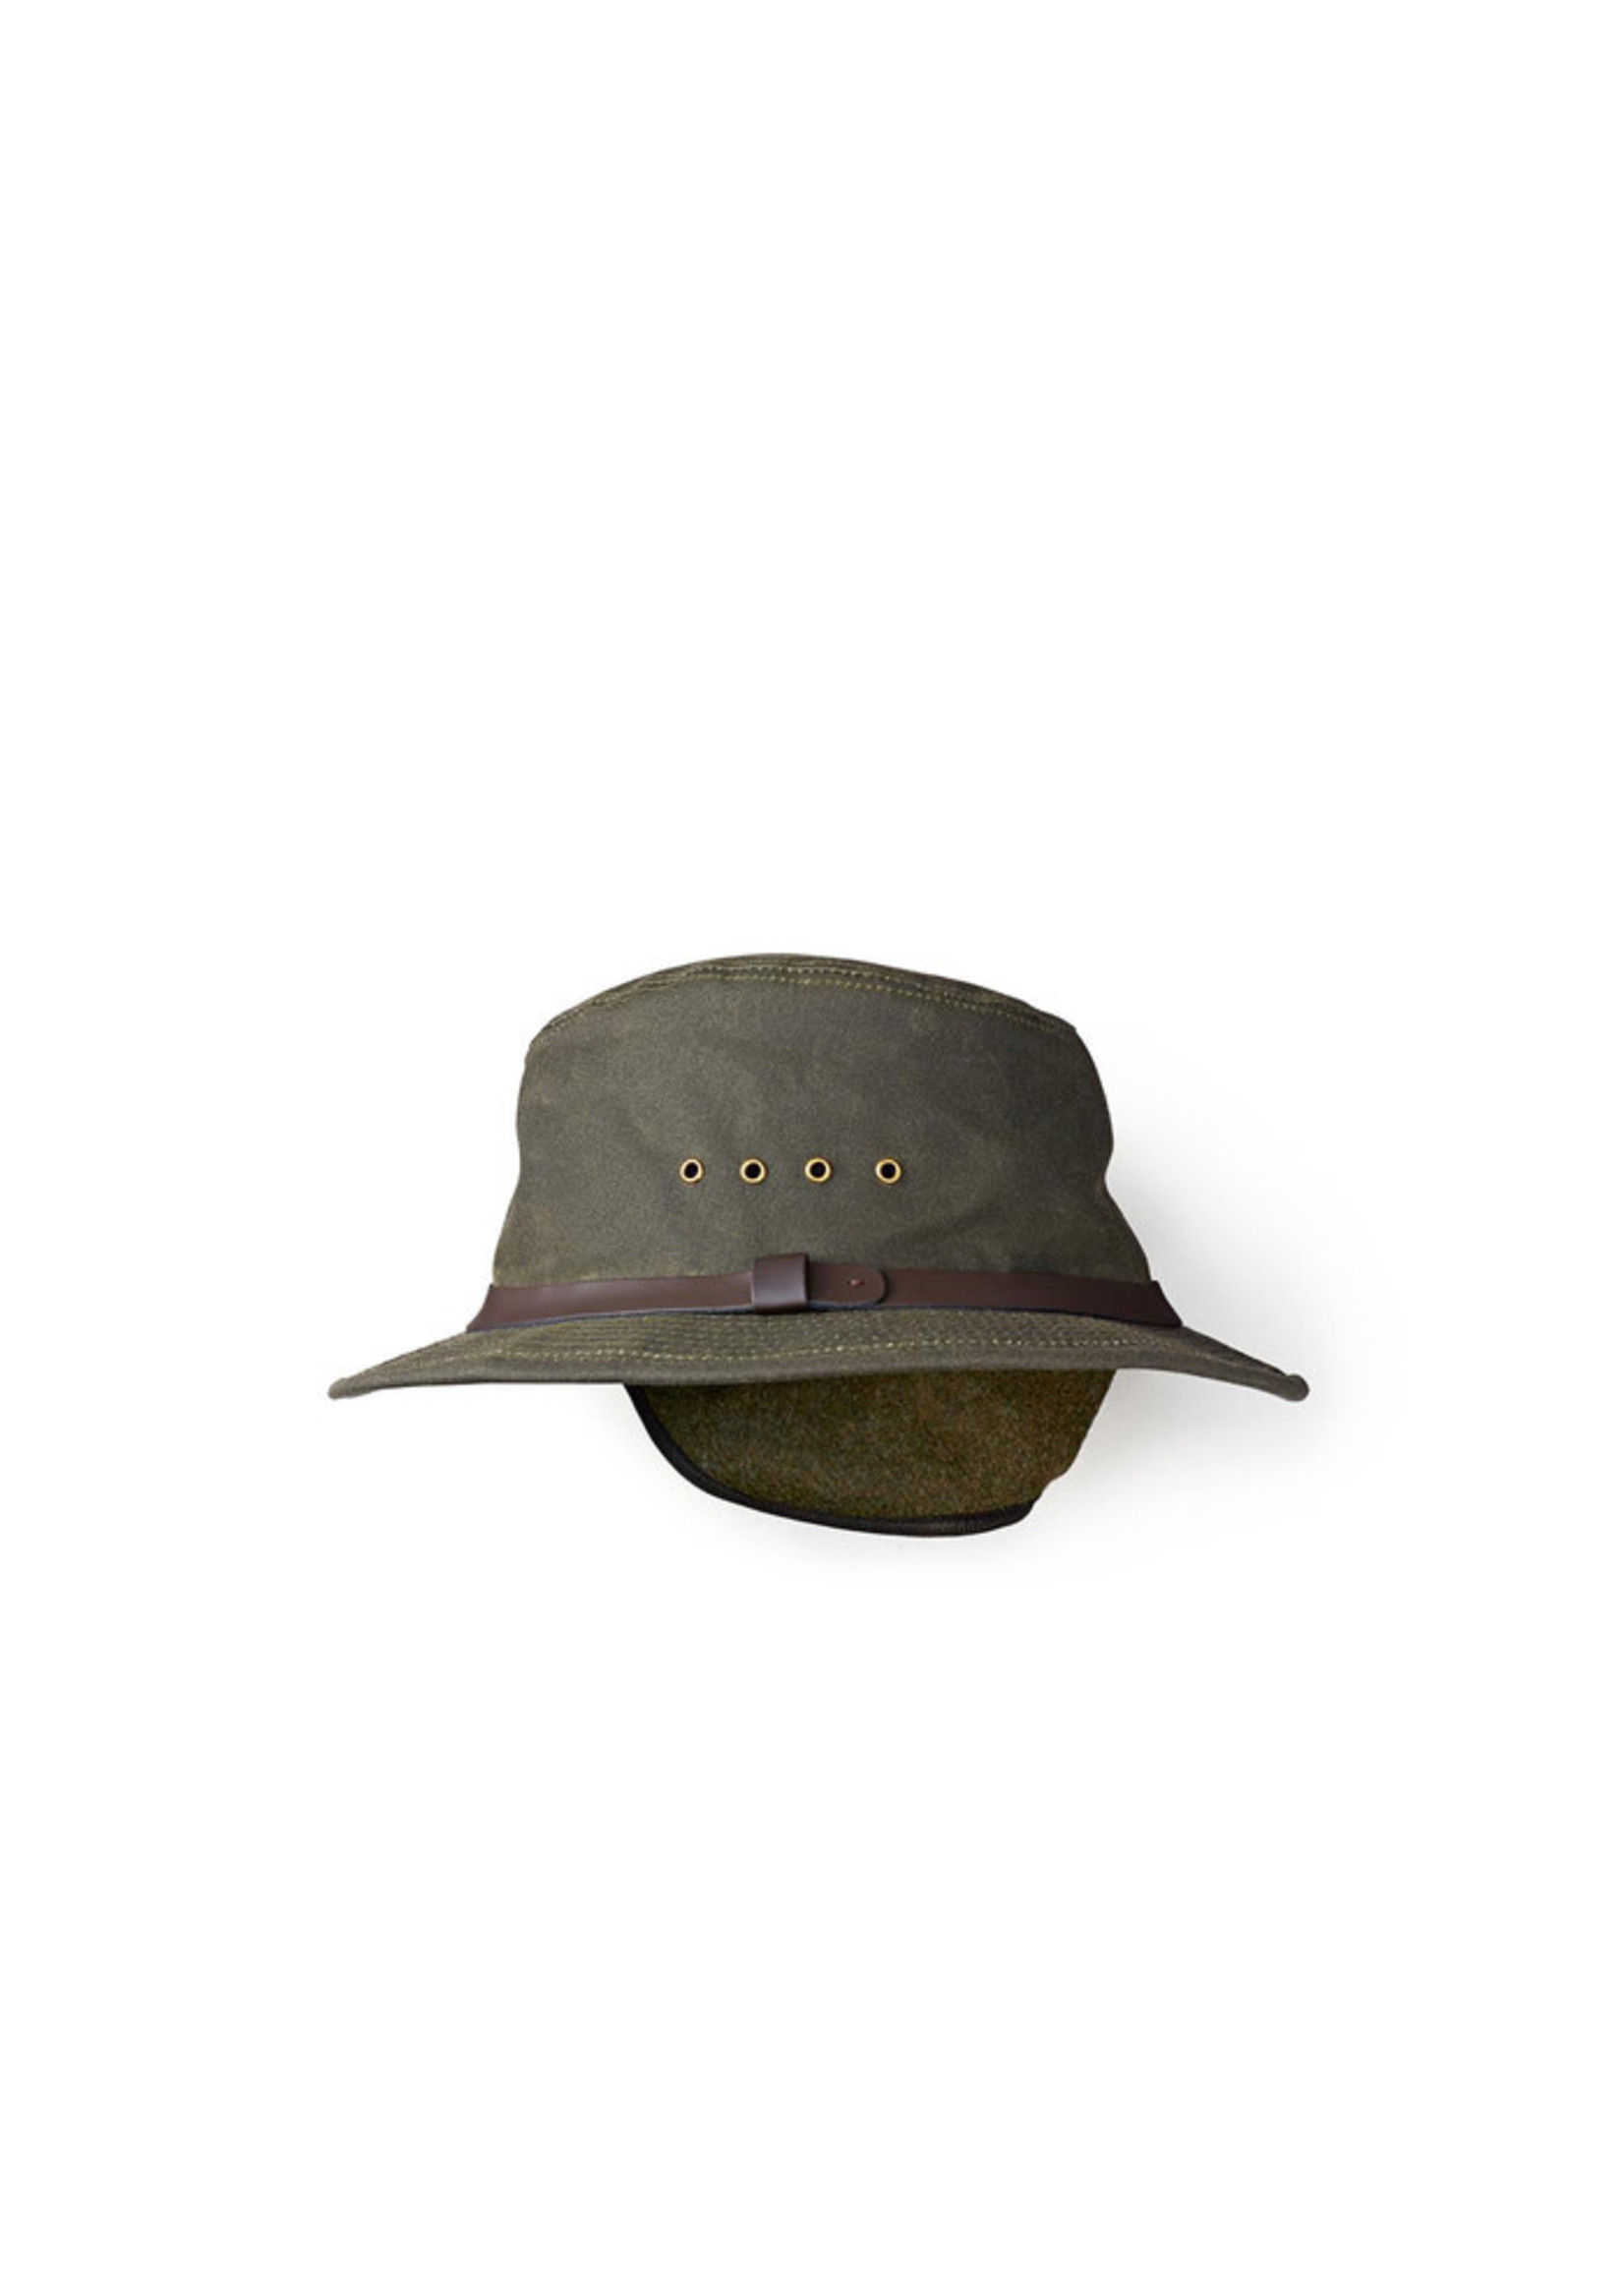 Filson Insulated Packer Hat: OtterGreen